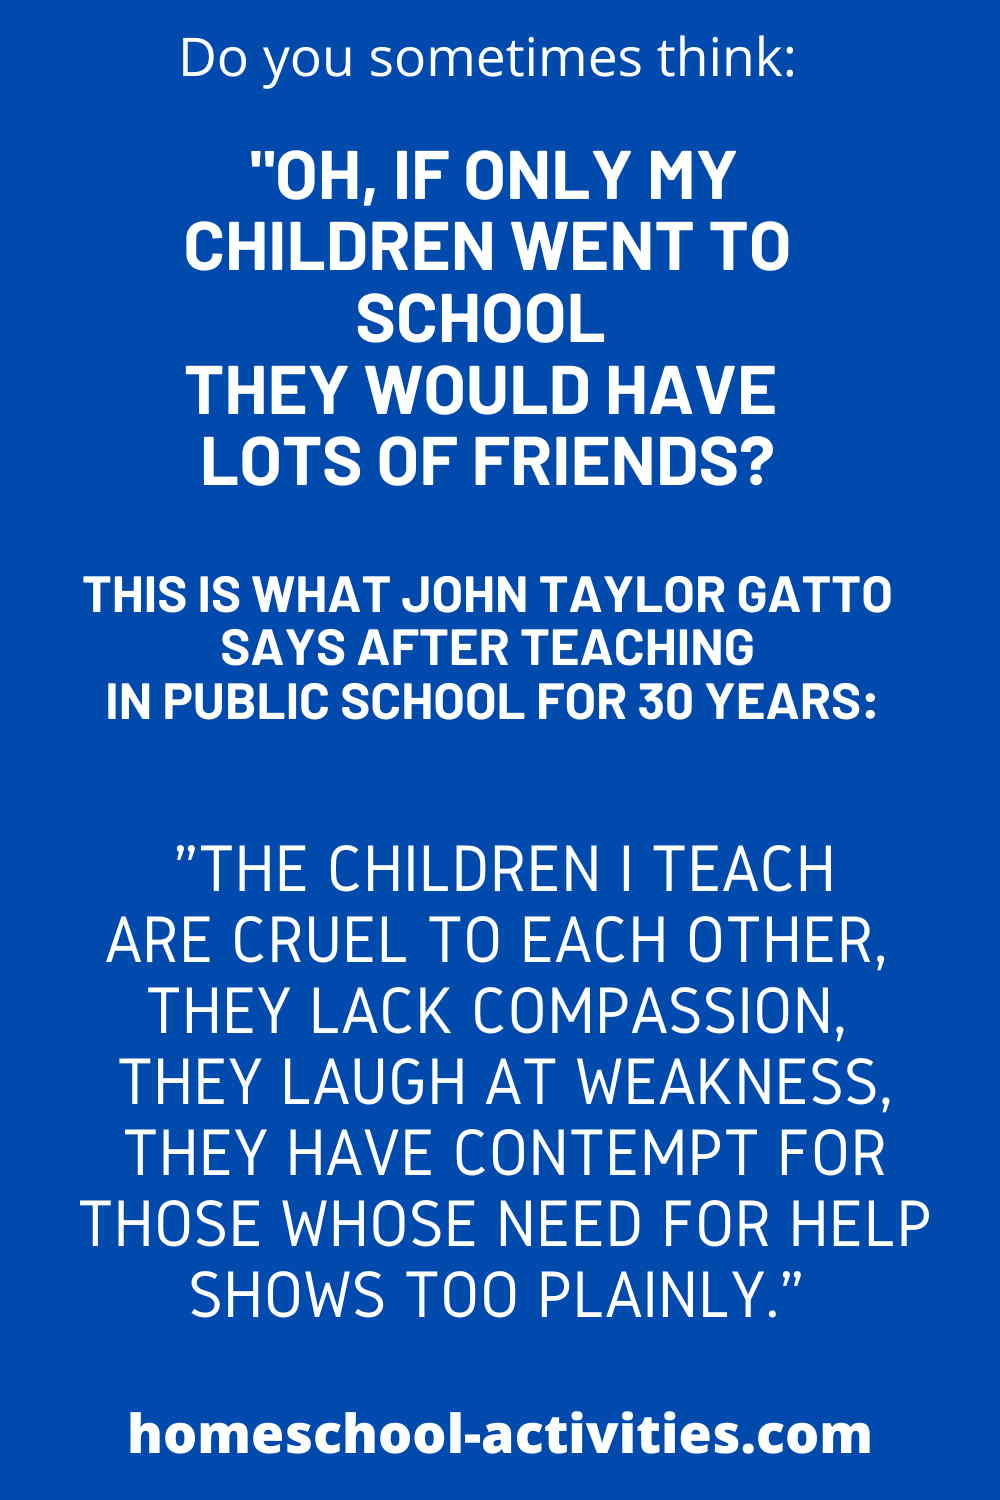 John Taylor Gatto quote on socialization in school